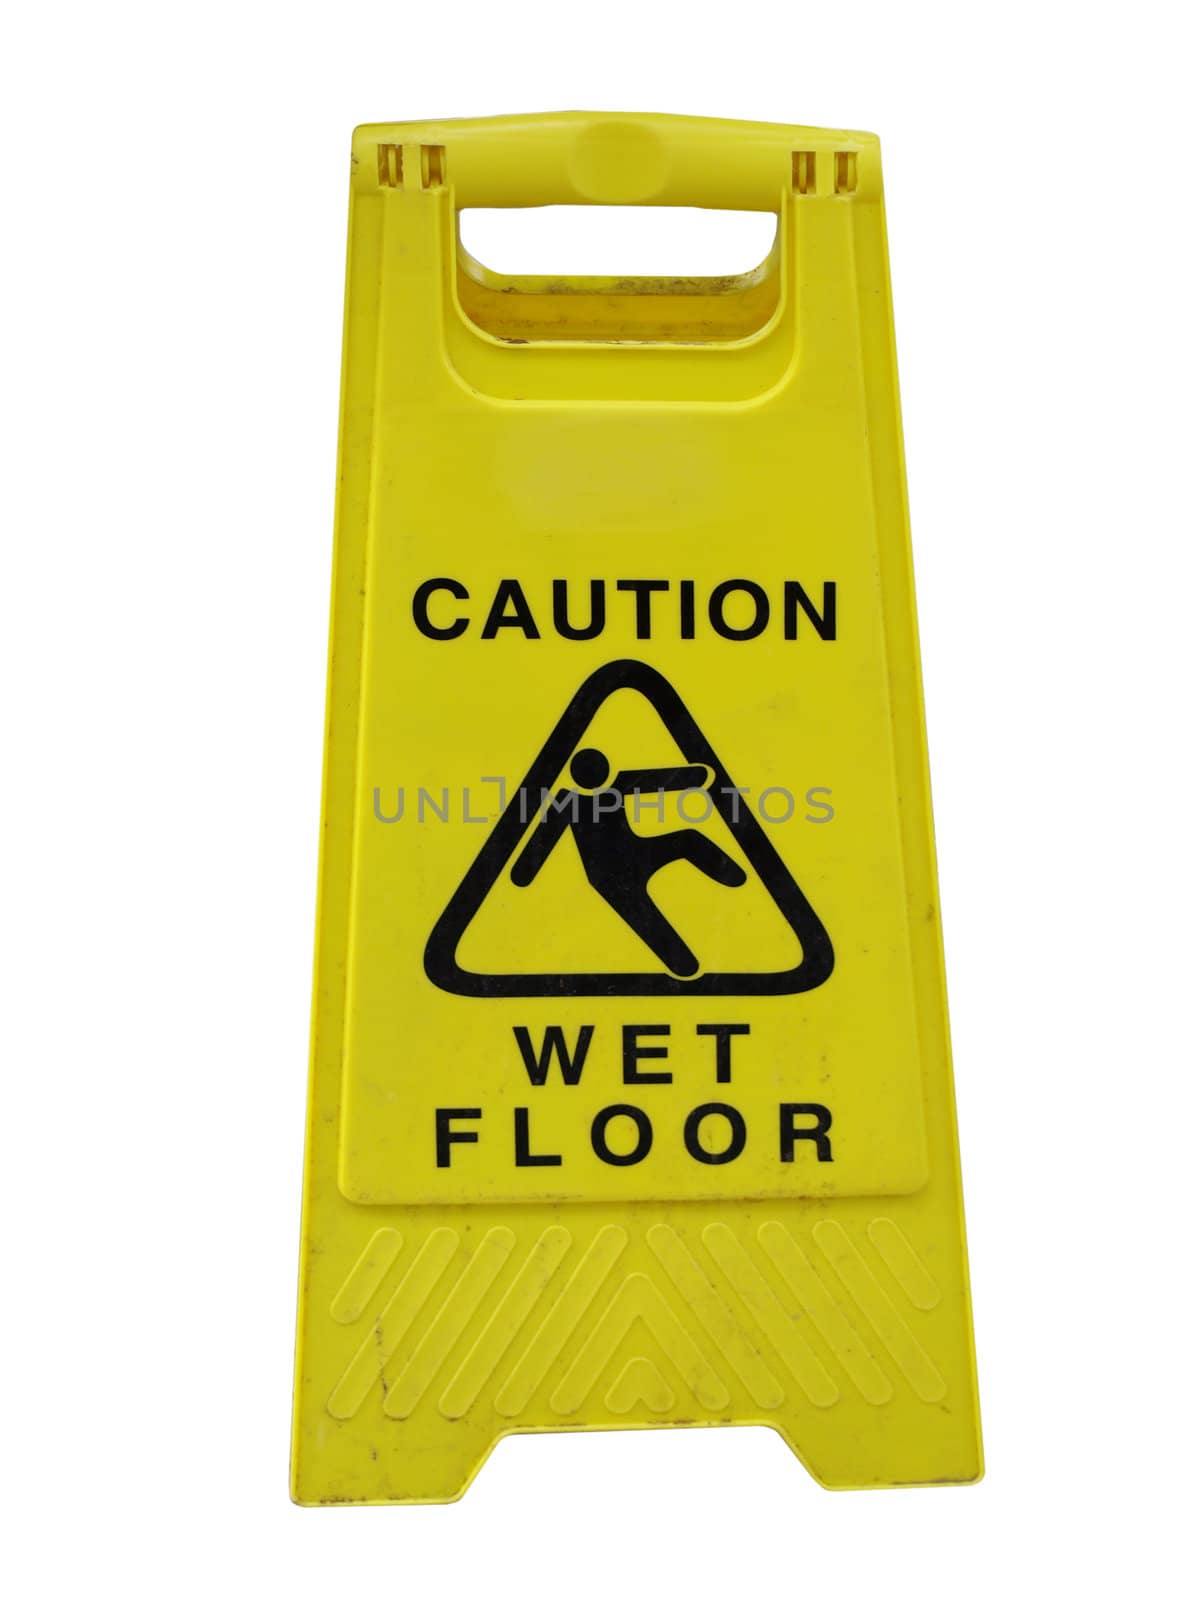 Caution wet floor by claudiodivizia